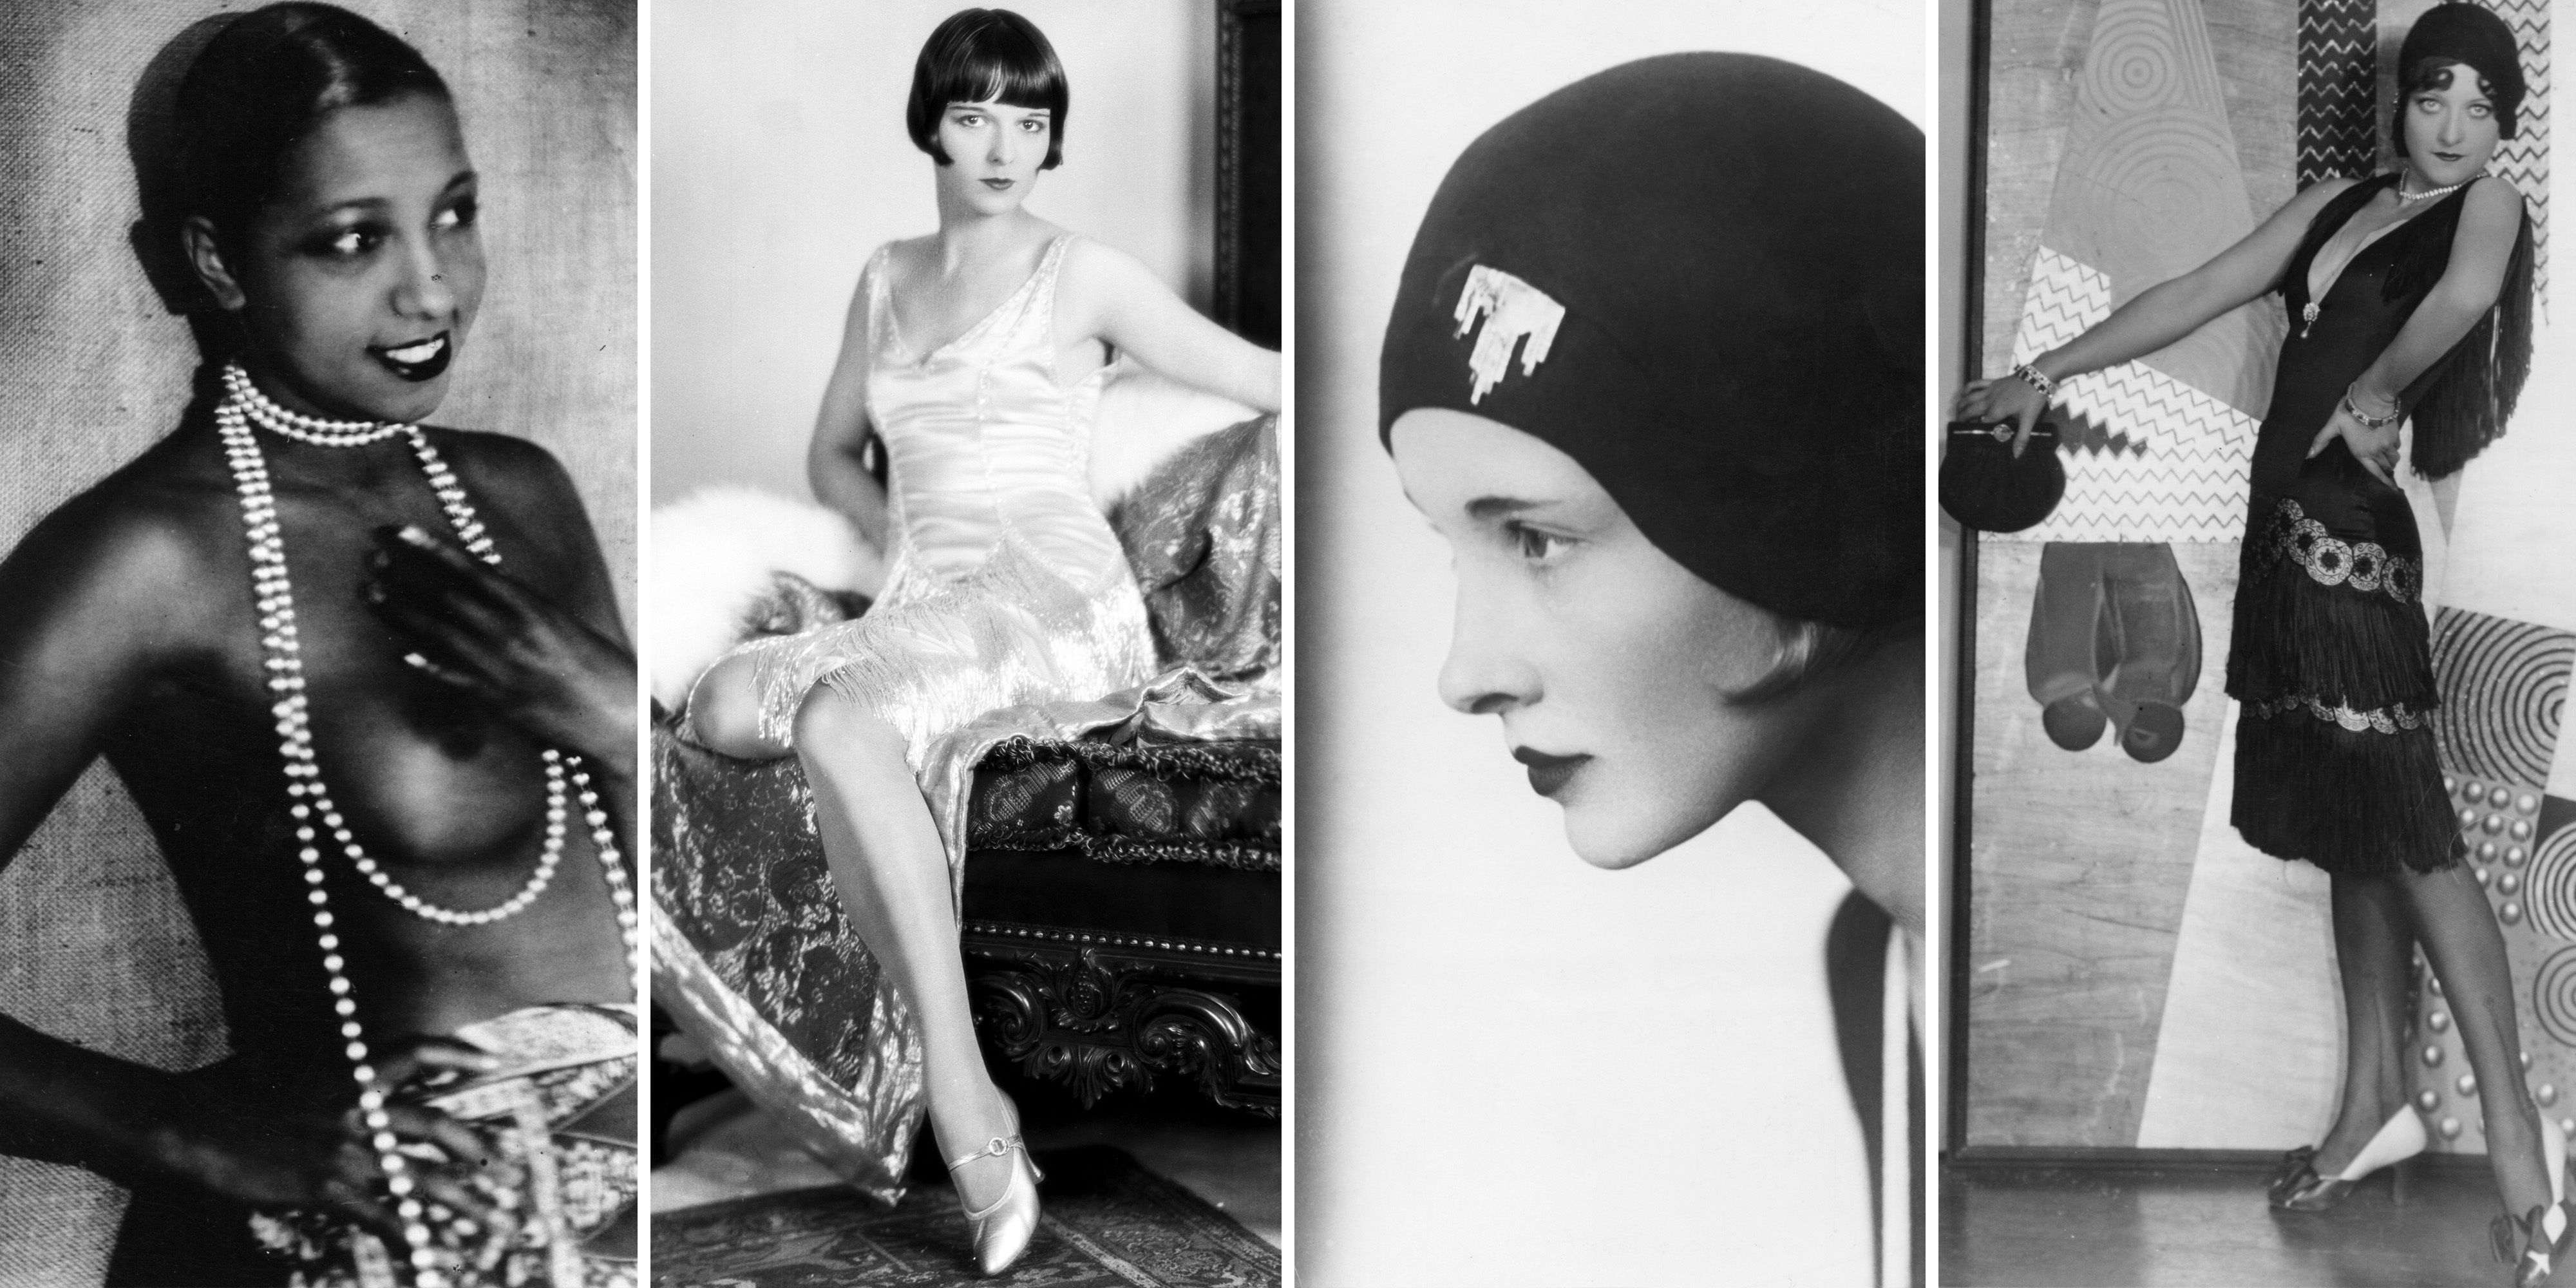 1920s style dresses